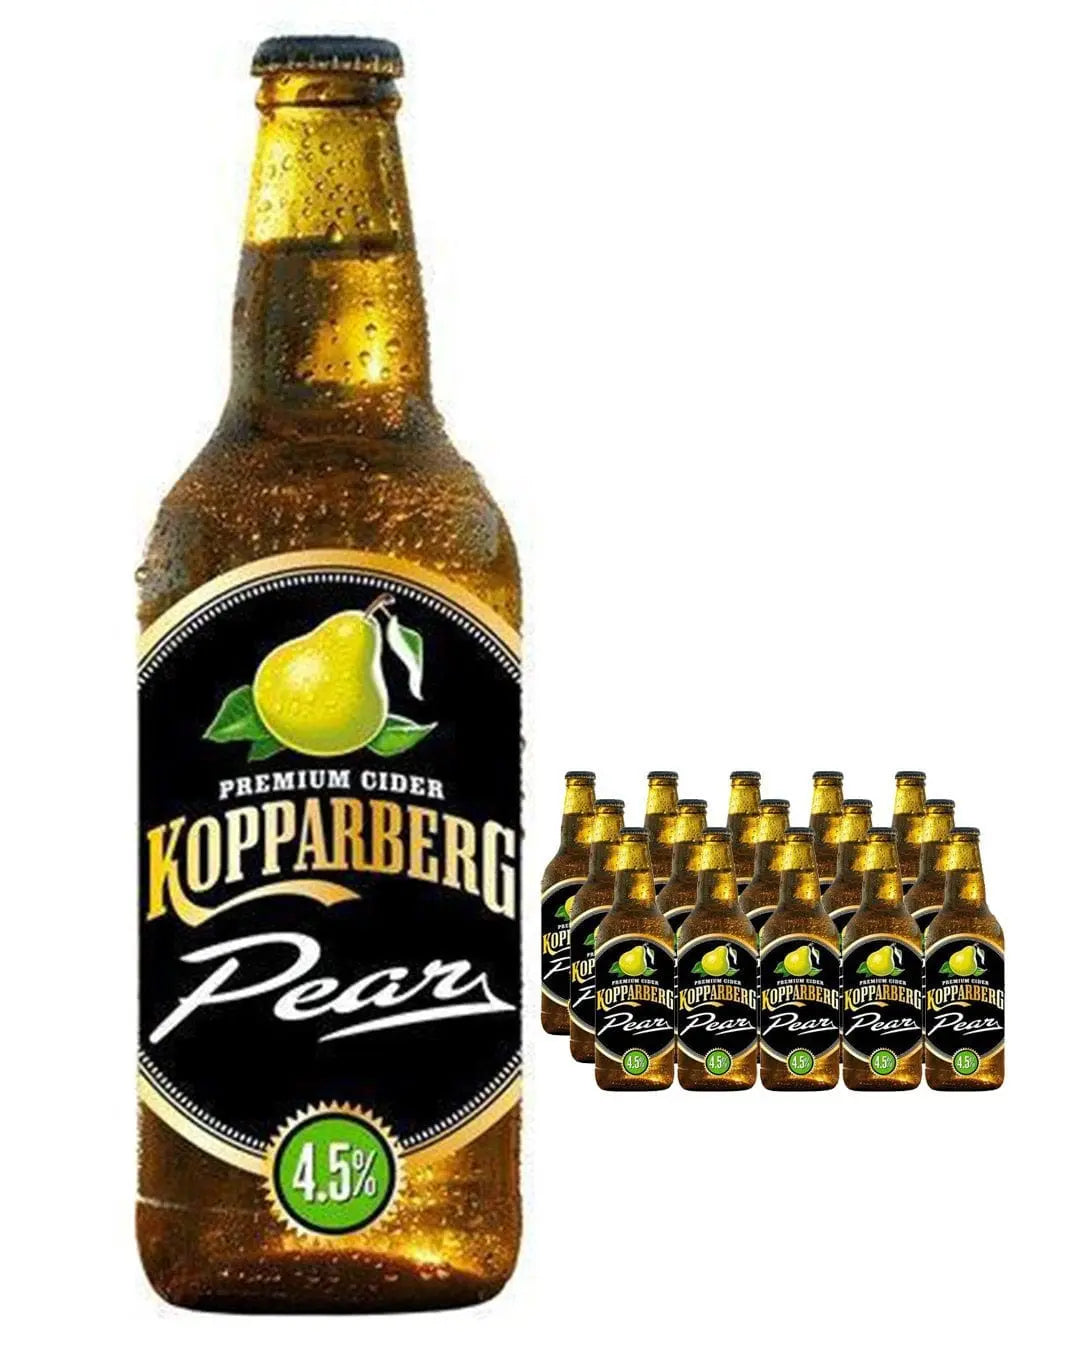 Kopparberg Pear Cider Bottle Multipack, 8 x 500 ml Cider